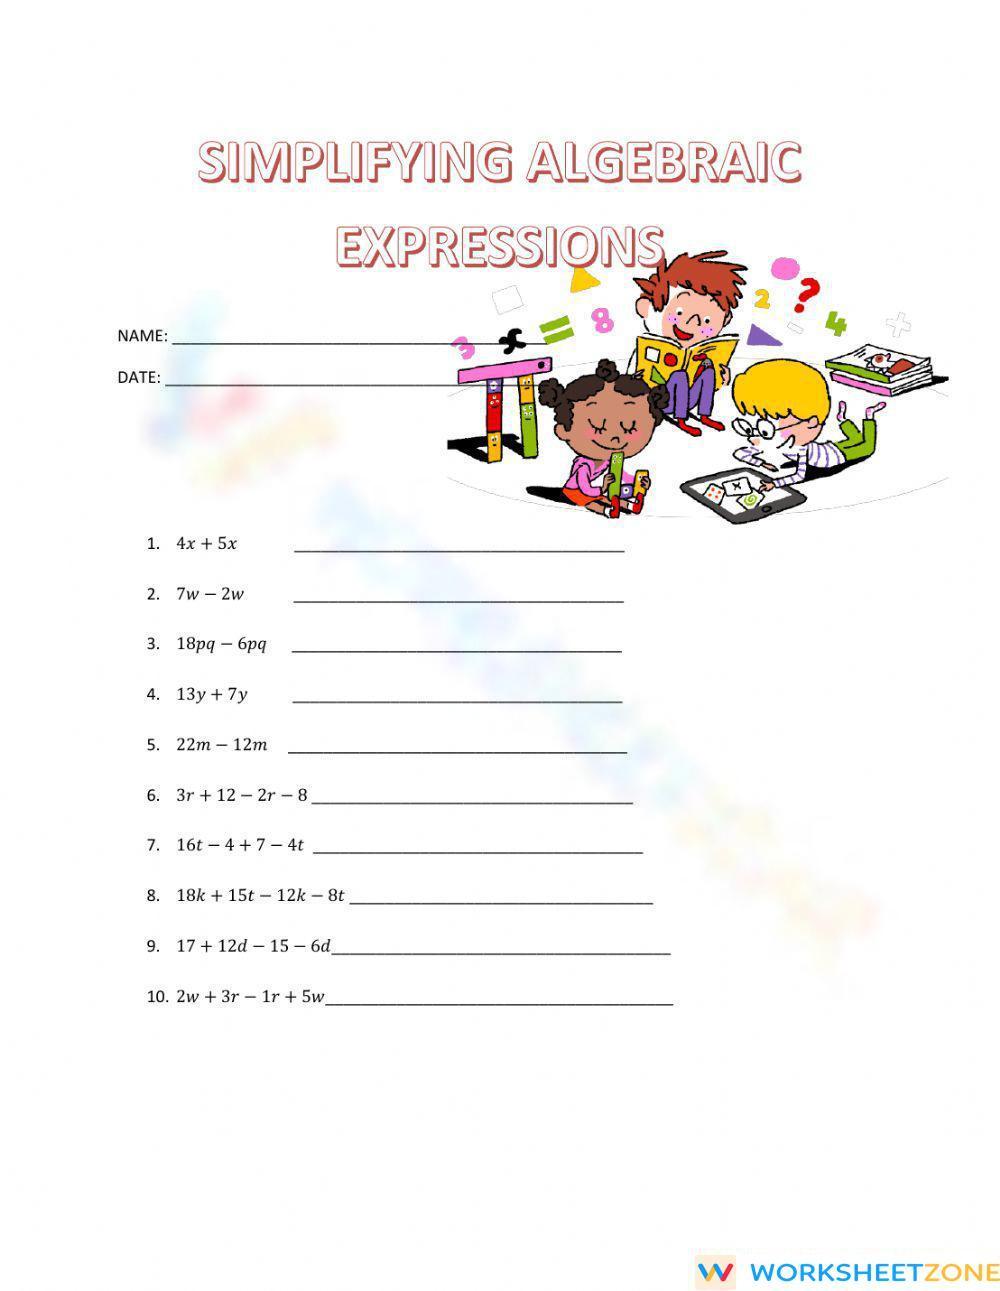 simplifying-algebraic-expressions-worksheet